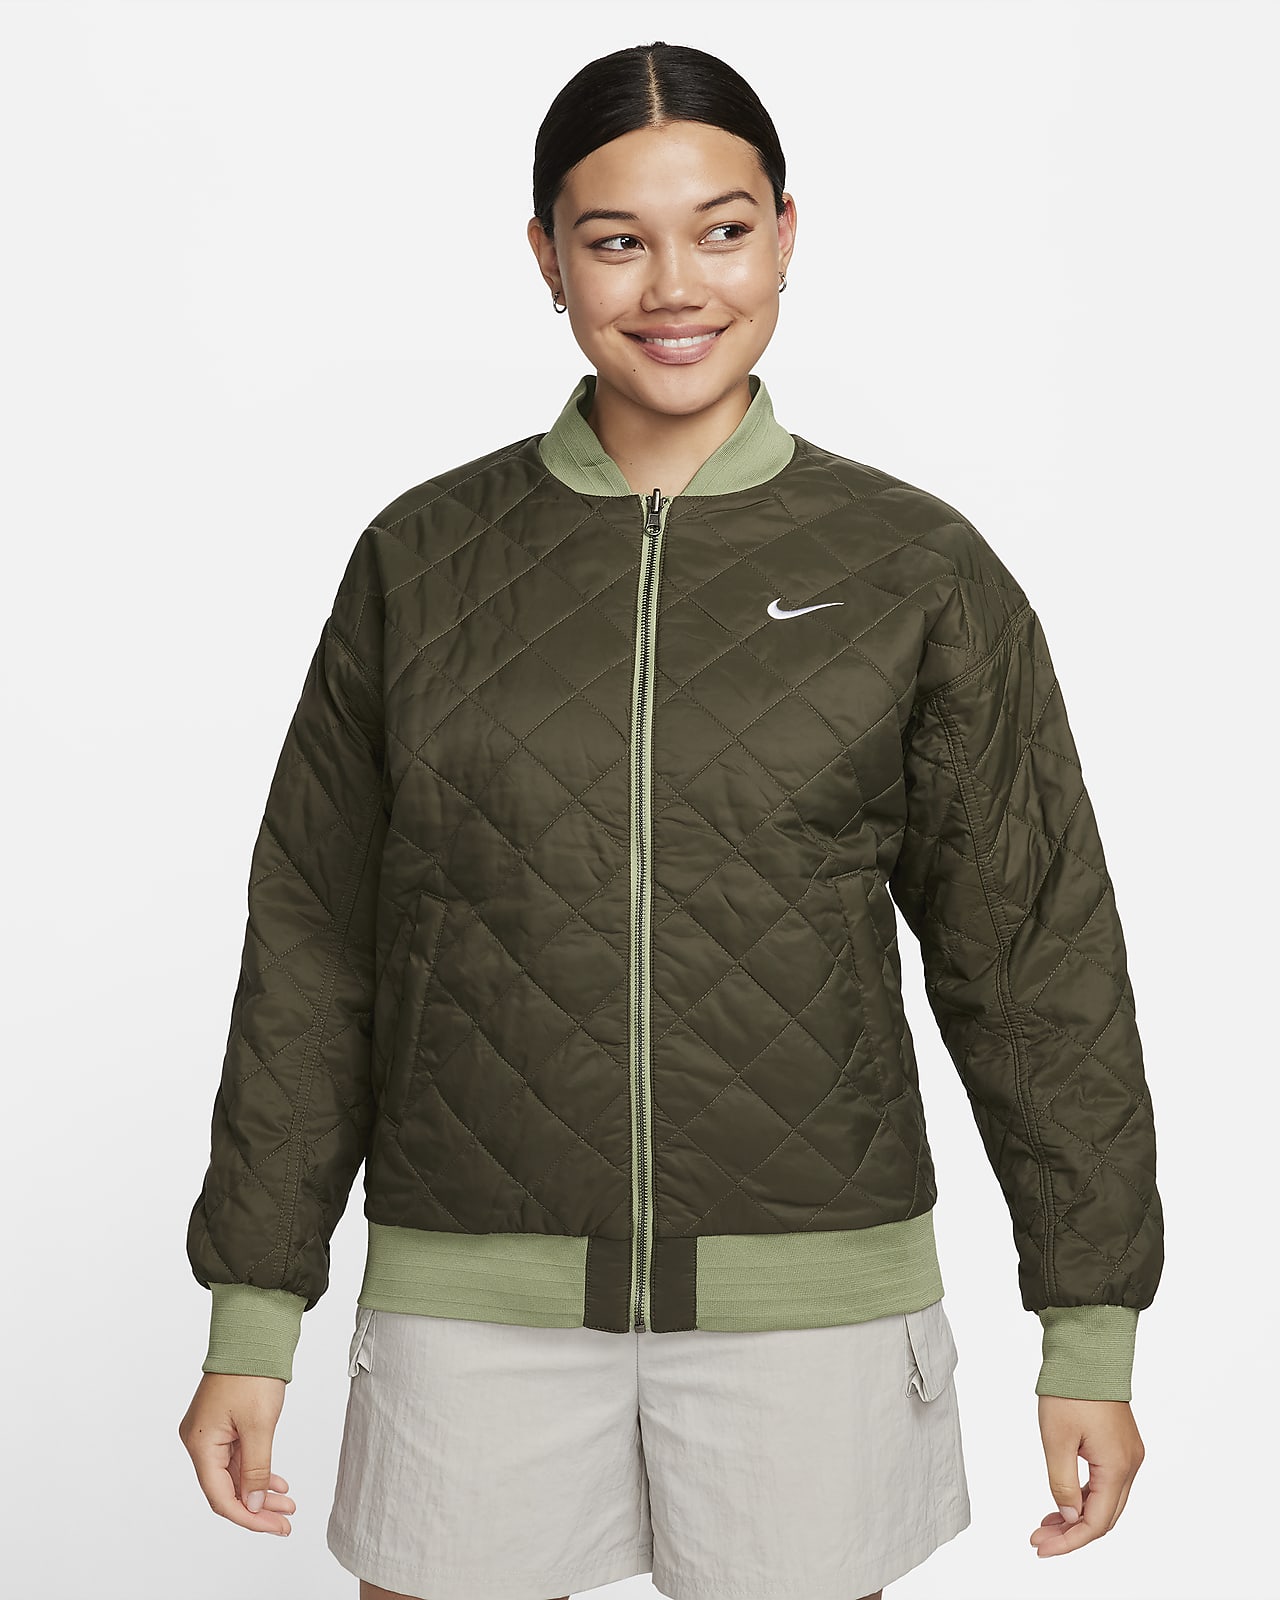 Nike Women's Sportswear Reversible Bomber Jacket in Green/Oil Green Size Medium | 100% Nylon/100% Polyester/Spandex